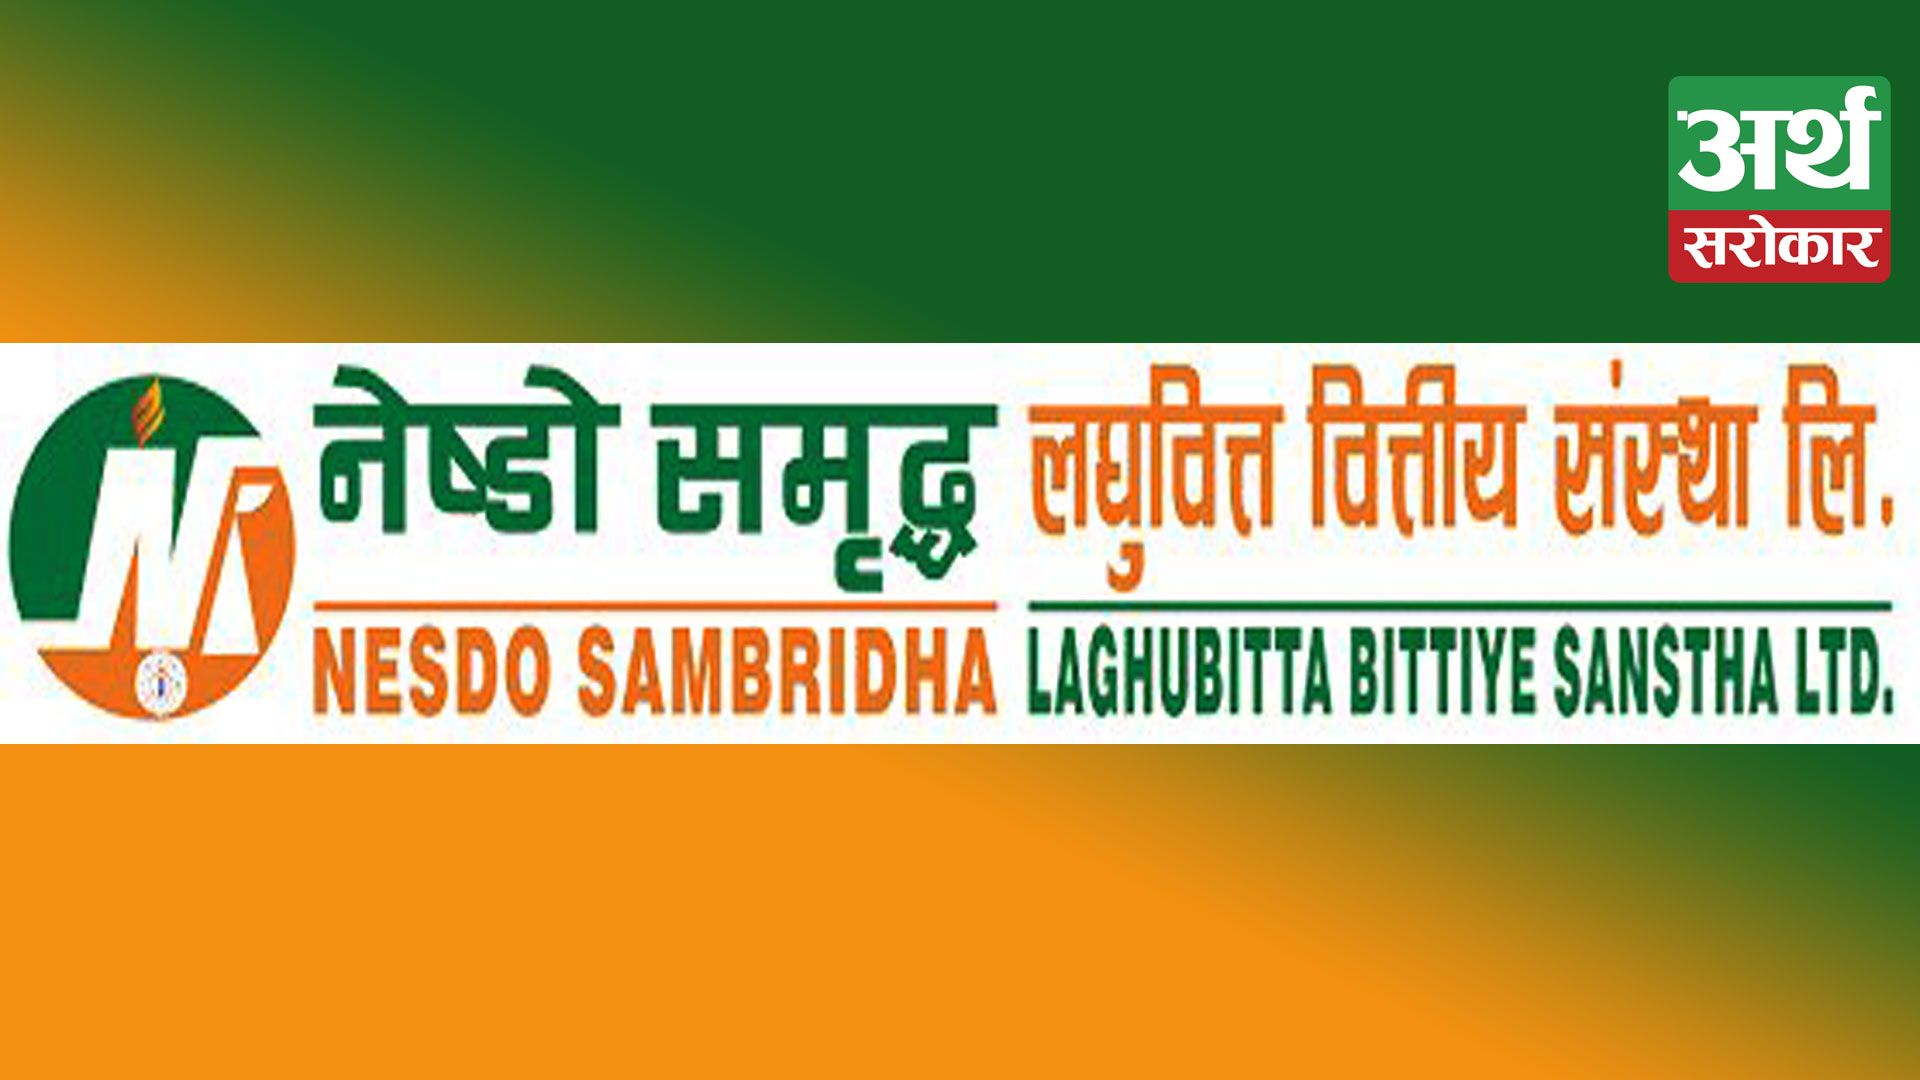 Nesdo samriddha laghubitta is not going to distribute dividend